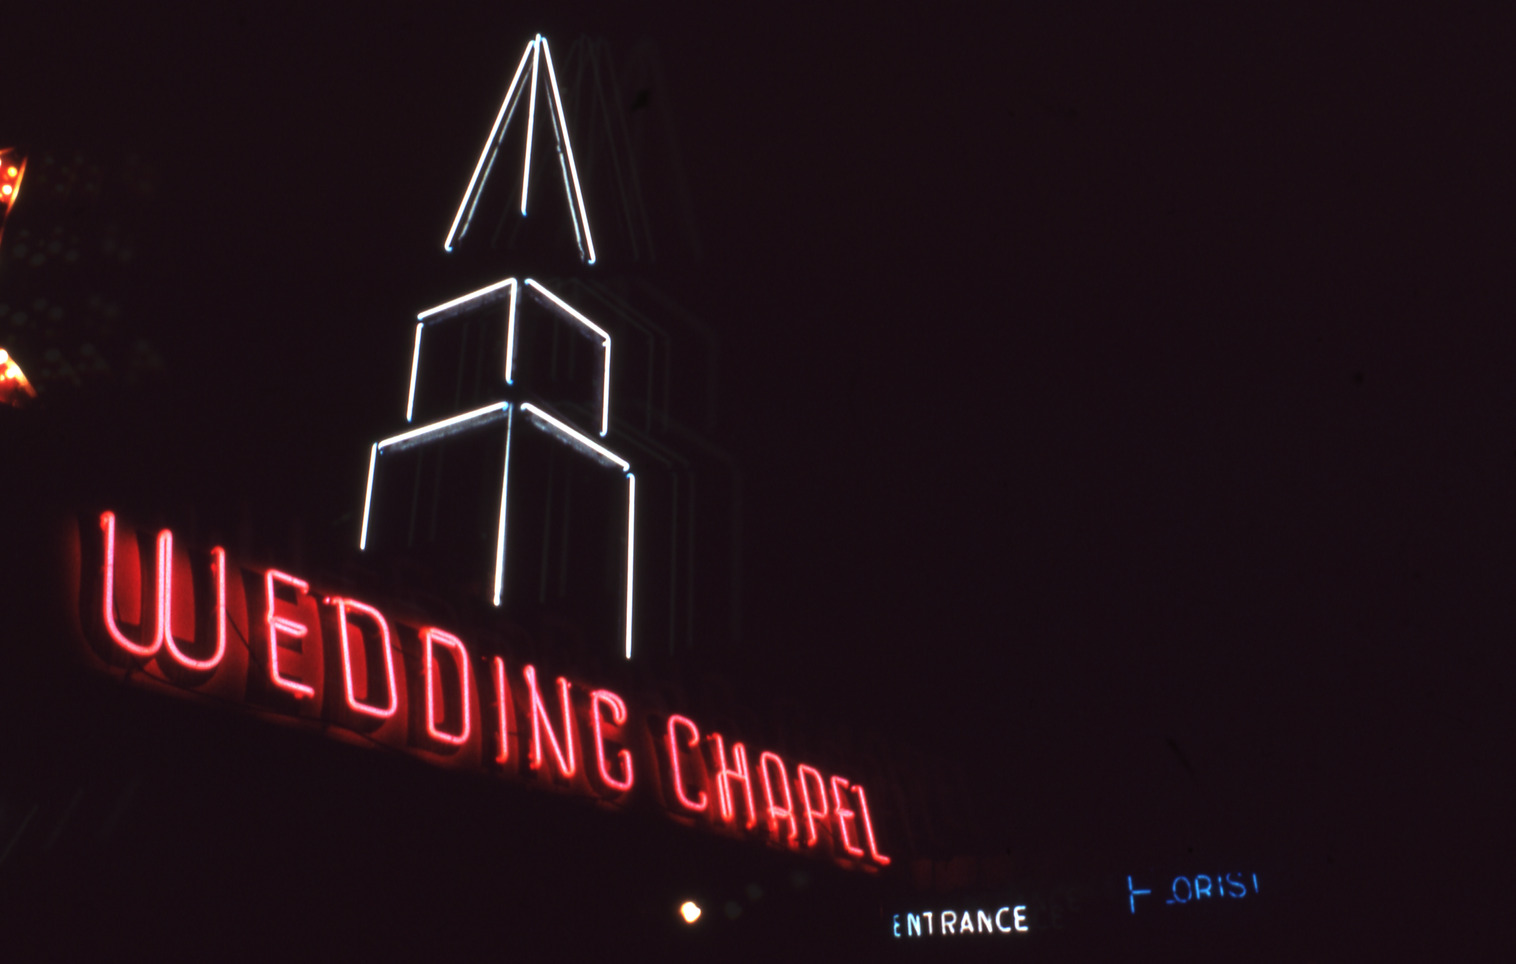 Wedding Chapel lettering sign, Las Vegas, Nevada: photographic print